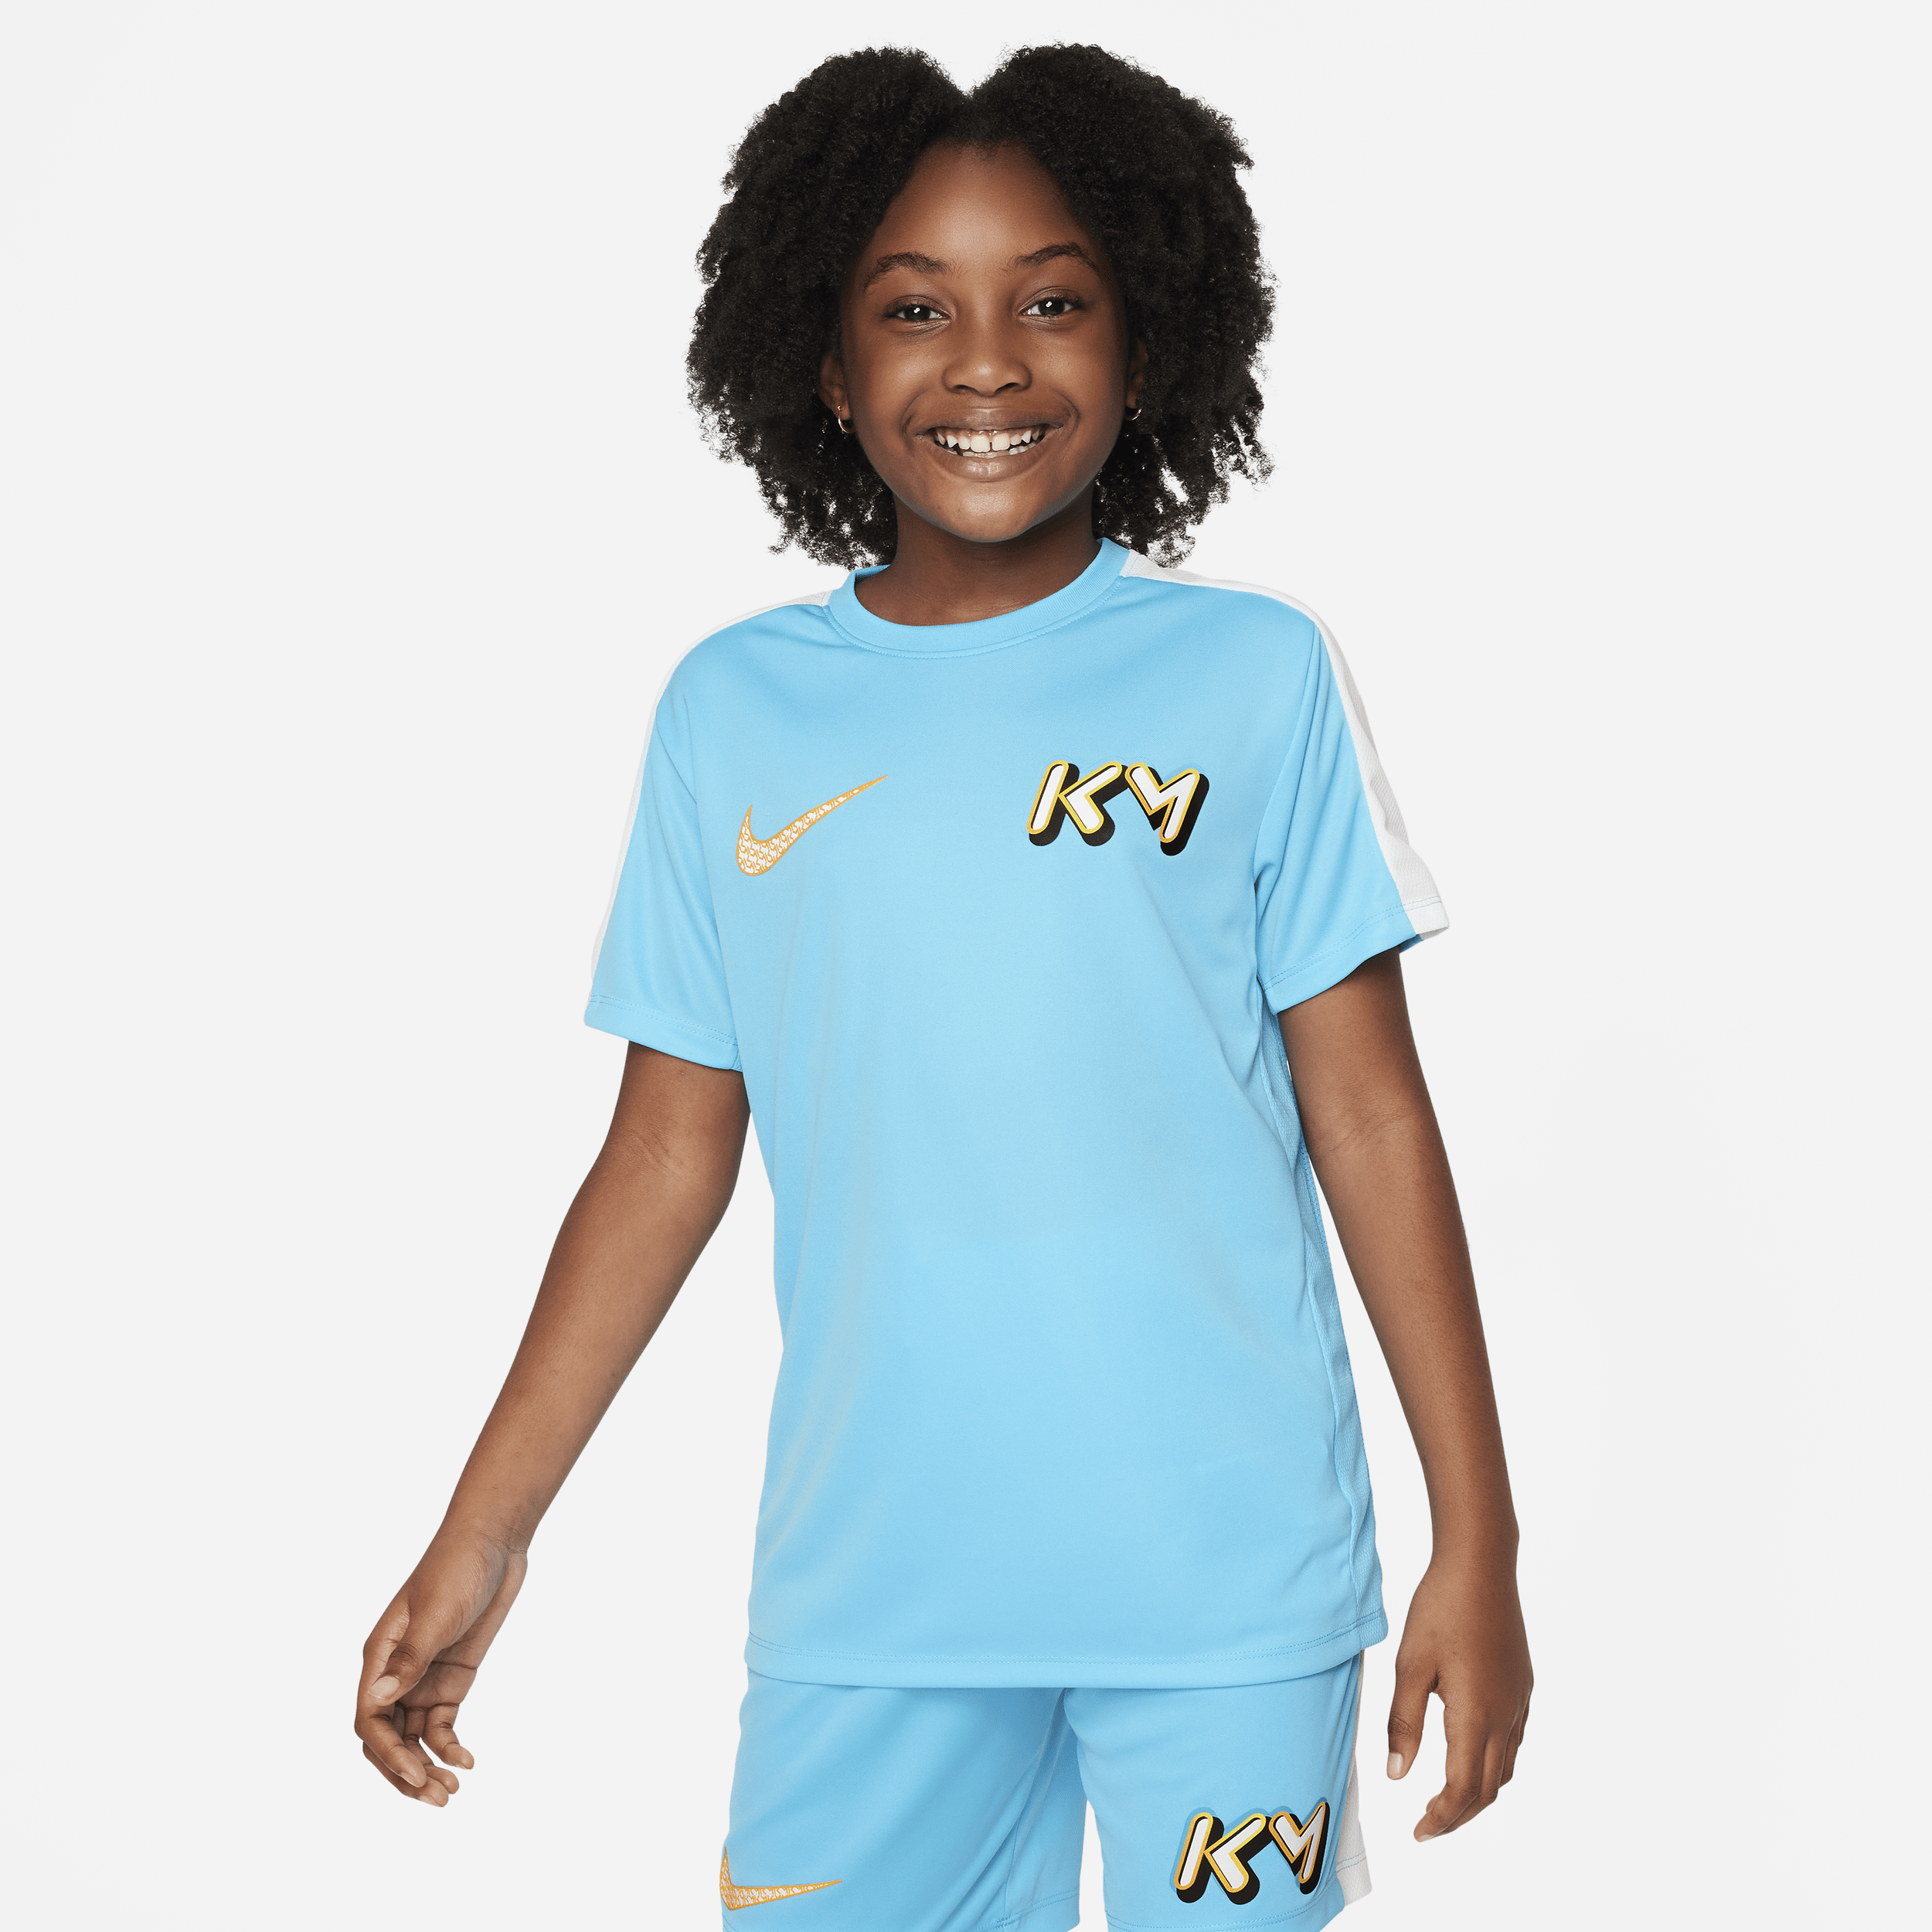 Nike KM Dri-FIT voetbaltop voor kids - Blauw